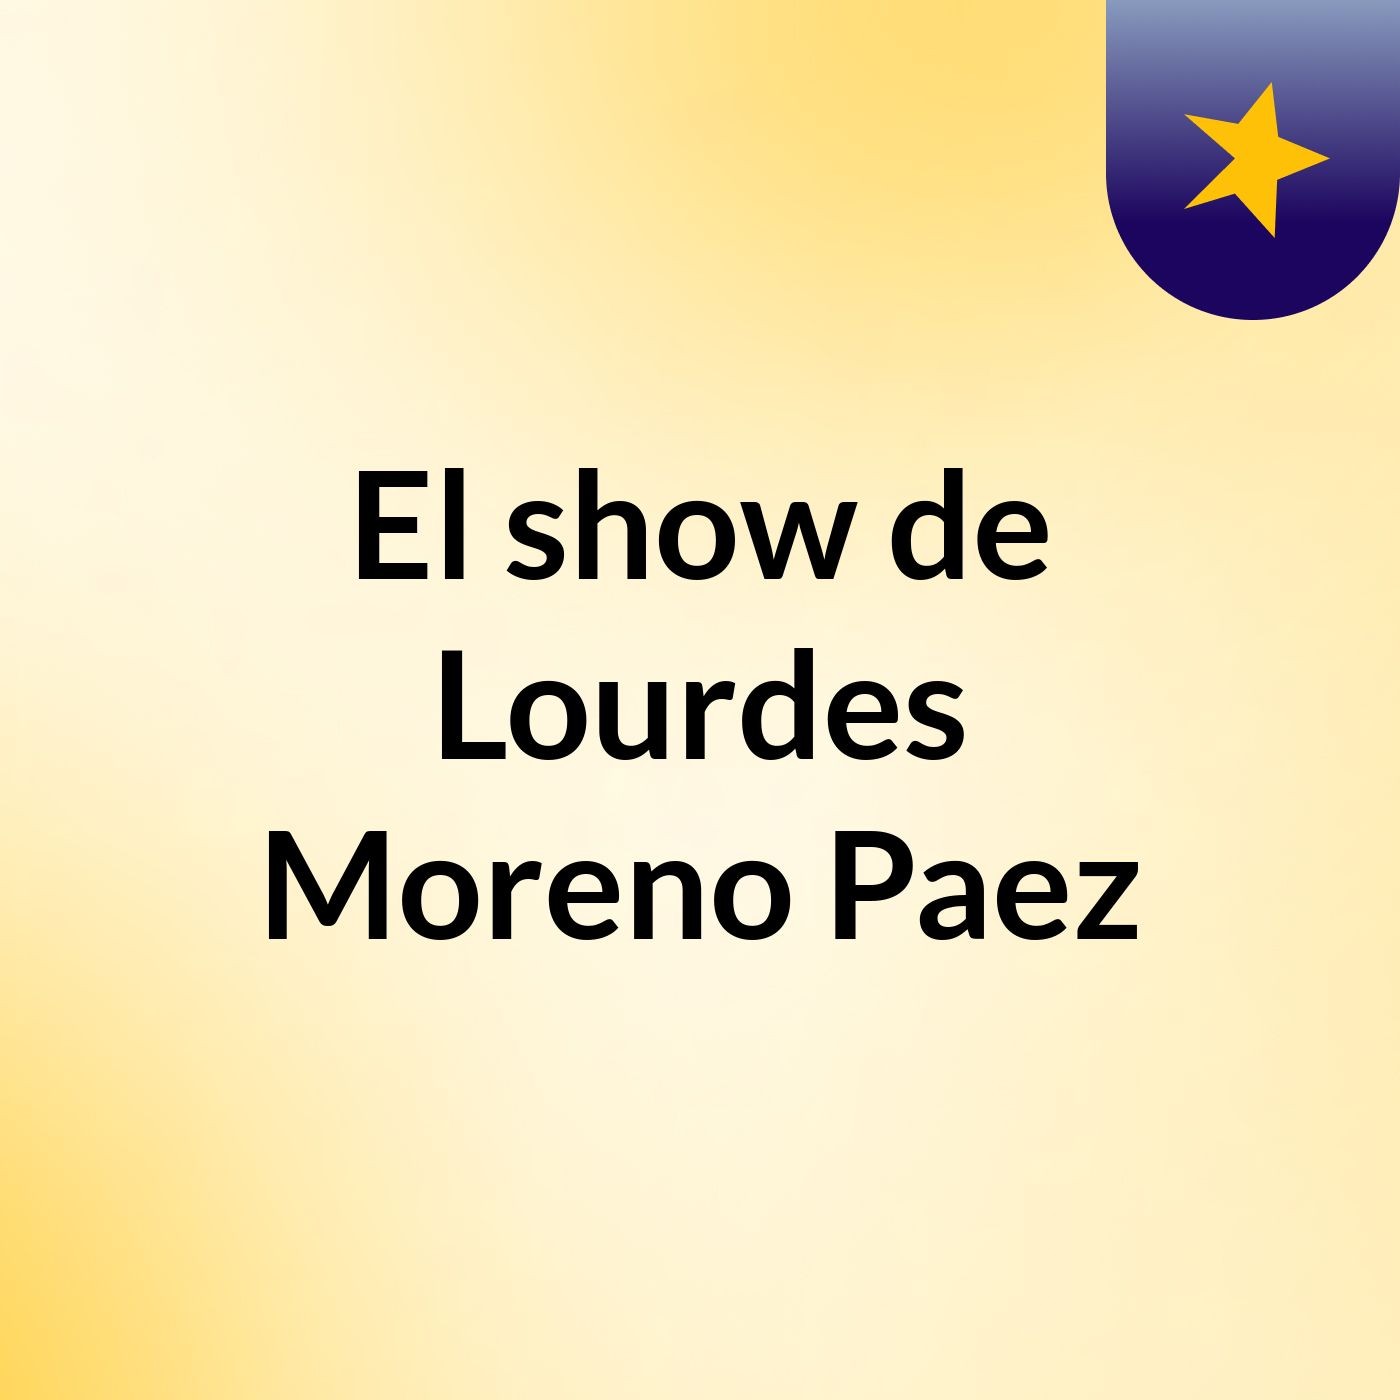 El show de Lourdes Moreno Paez